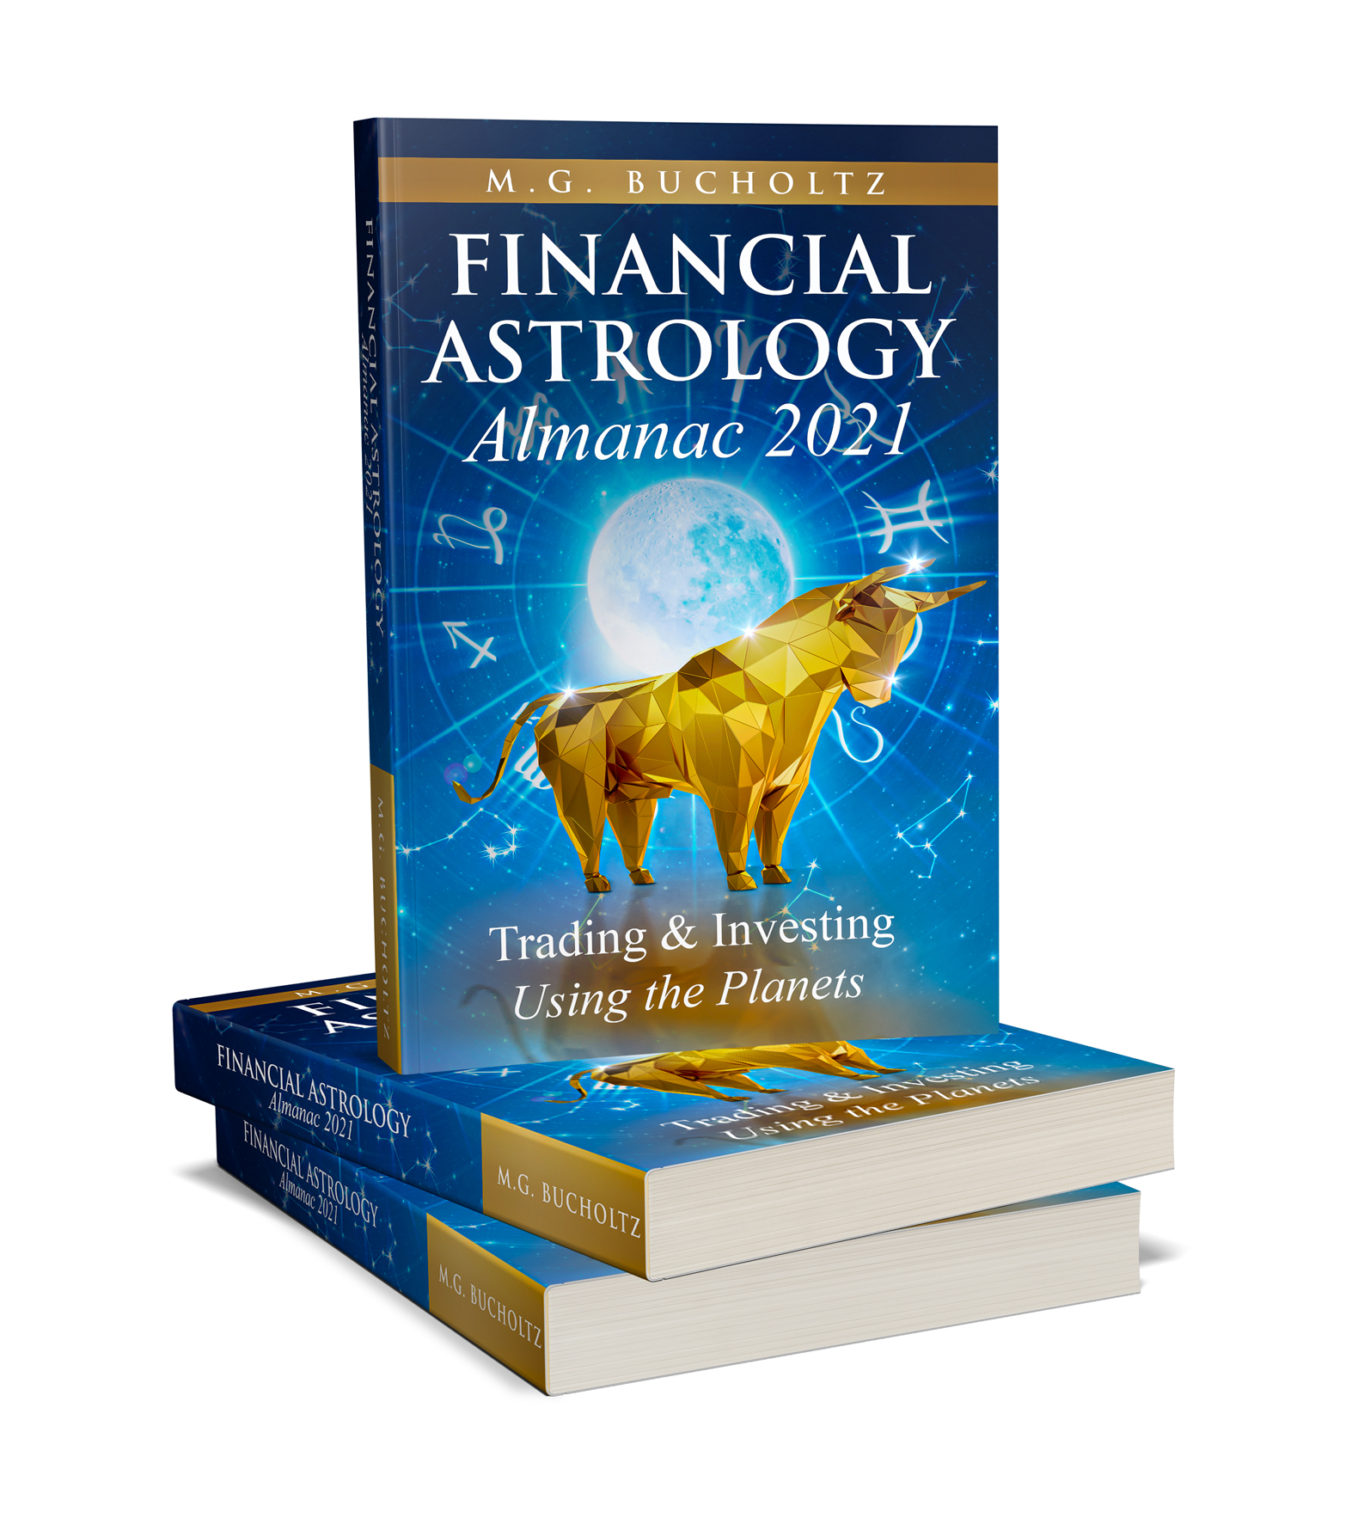 Financial Astrology Wood Dragon Books